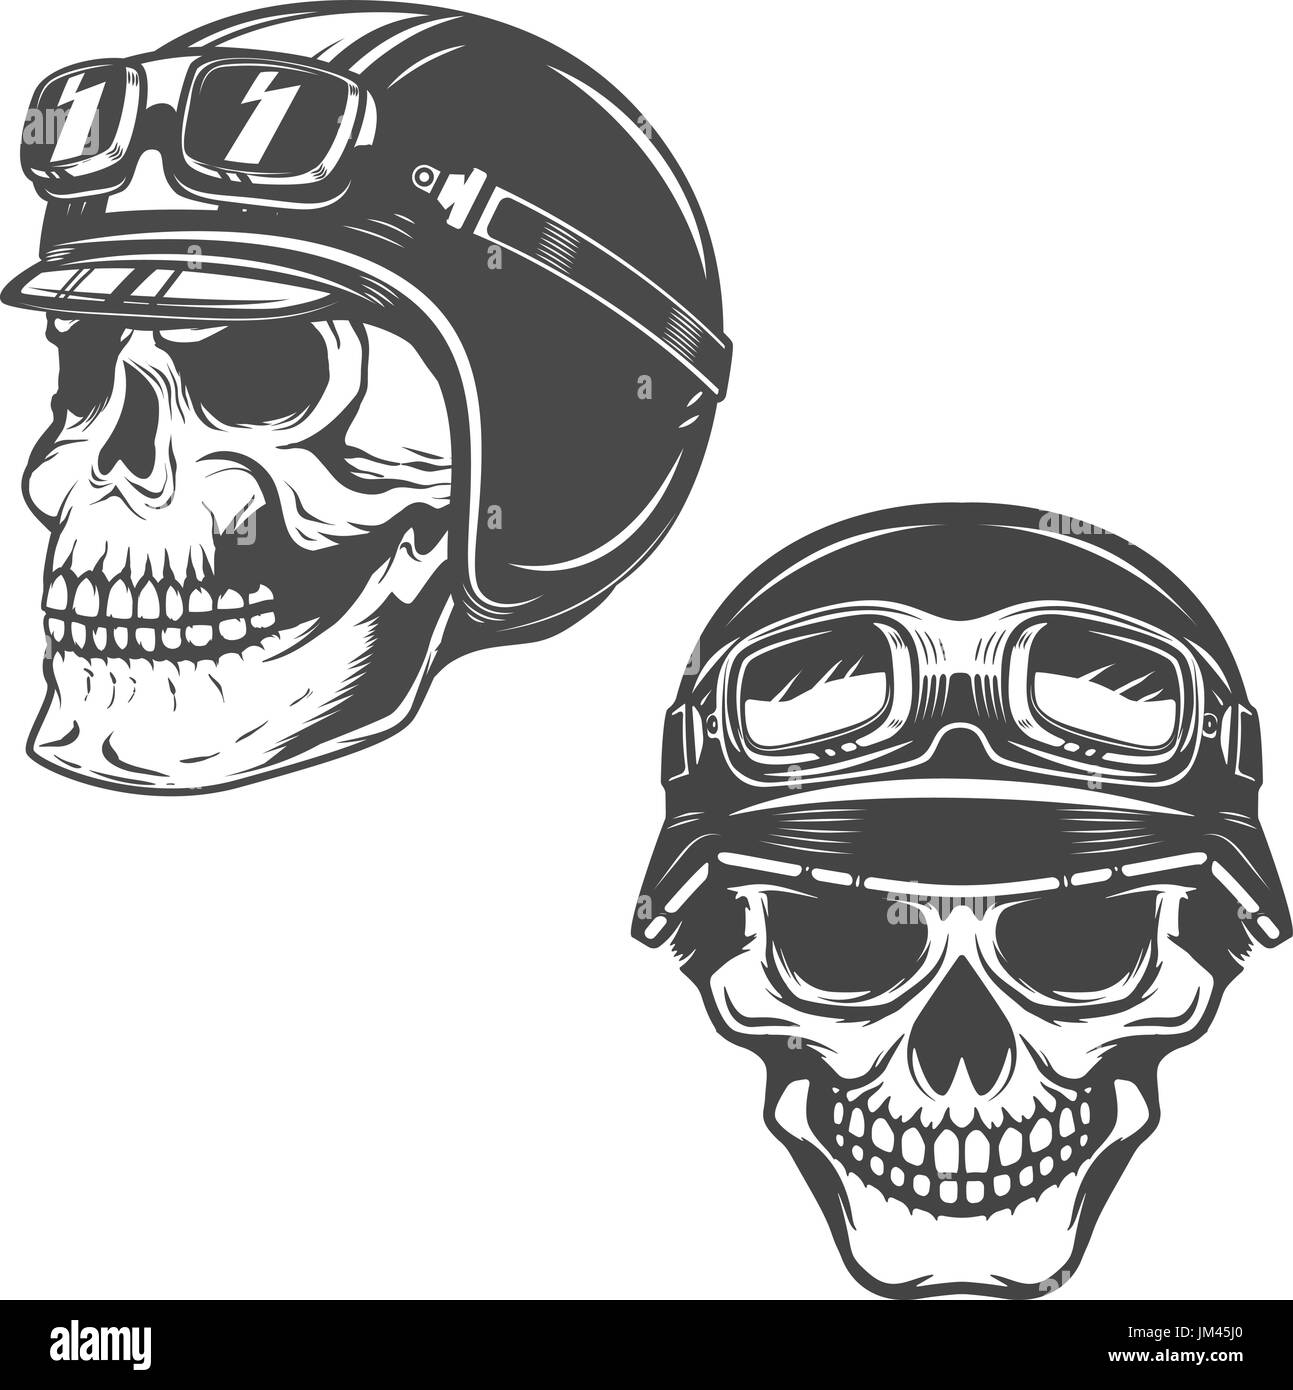 Set of racer skulls isolated on white background. Design elements for logo, label, emblem, poster, t-shirt. Vector illustration. Stock Vector